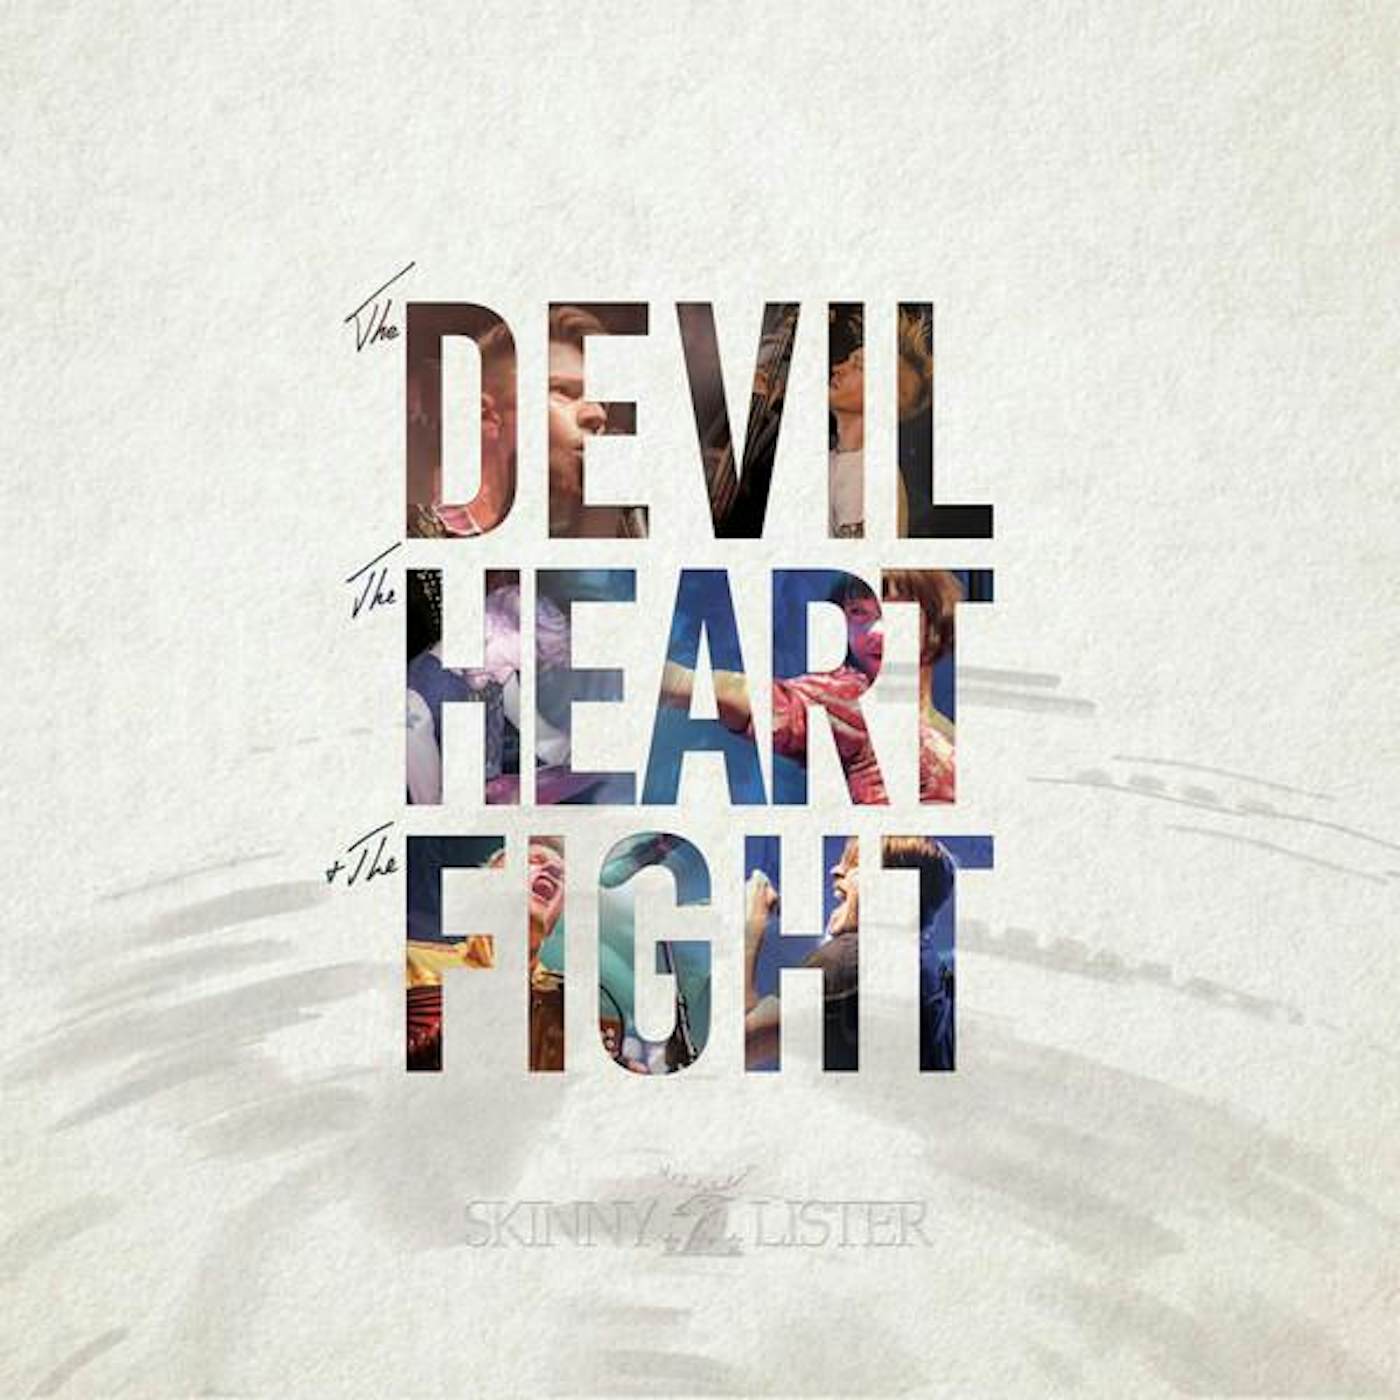 Skinny Lister DEVIL THE HEART THE FIGHT CD